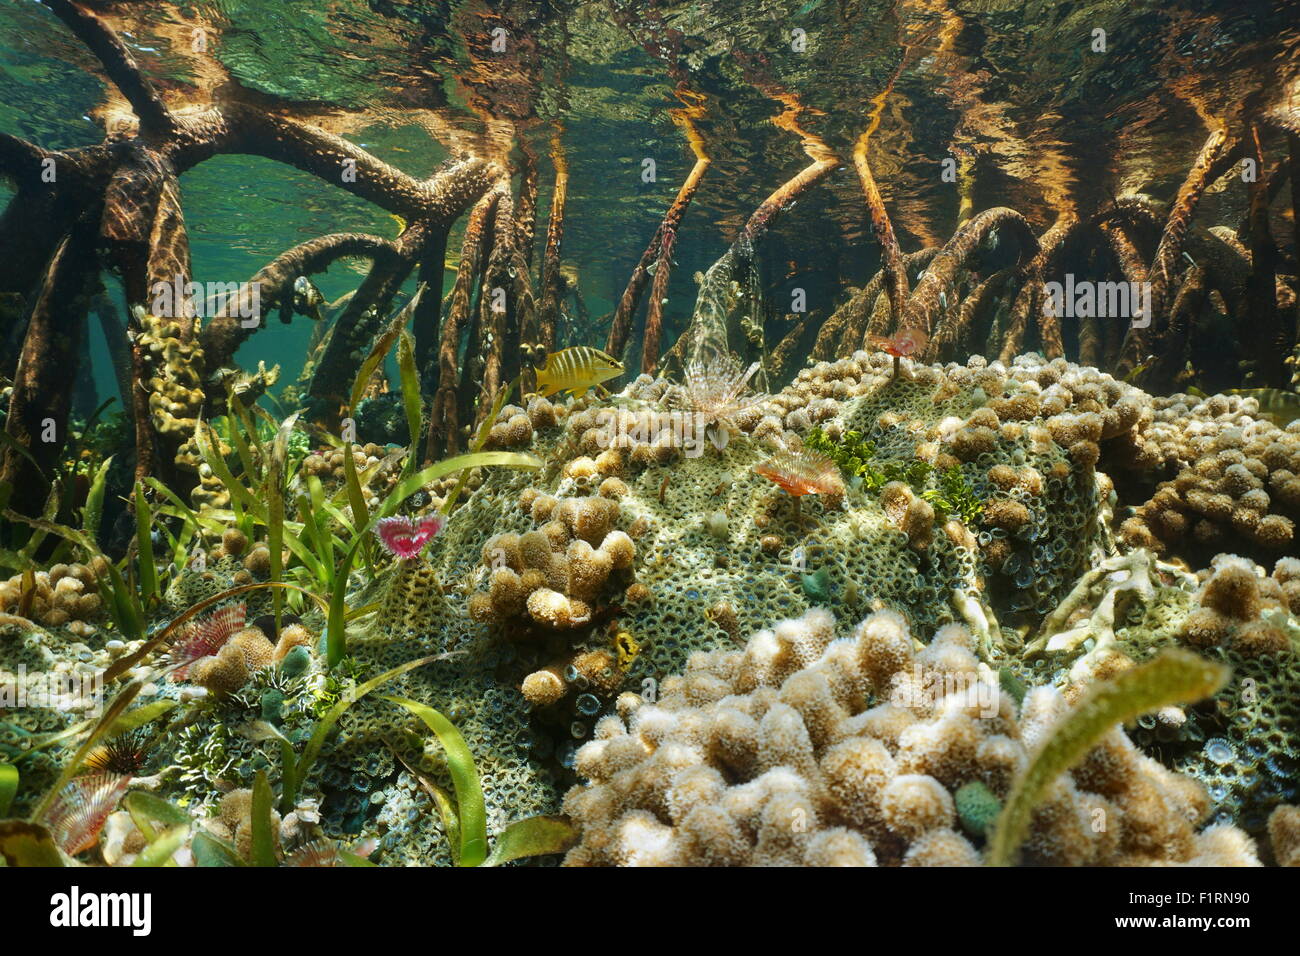 Mangrove ecosystem underwater with marine life on the ocean floor between the tree roots, Bahamas Stock Photo